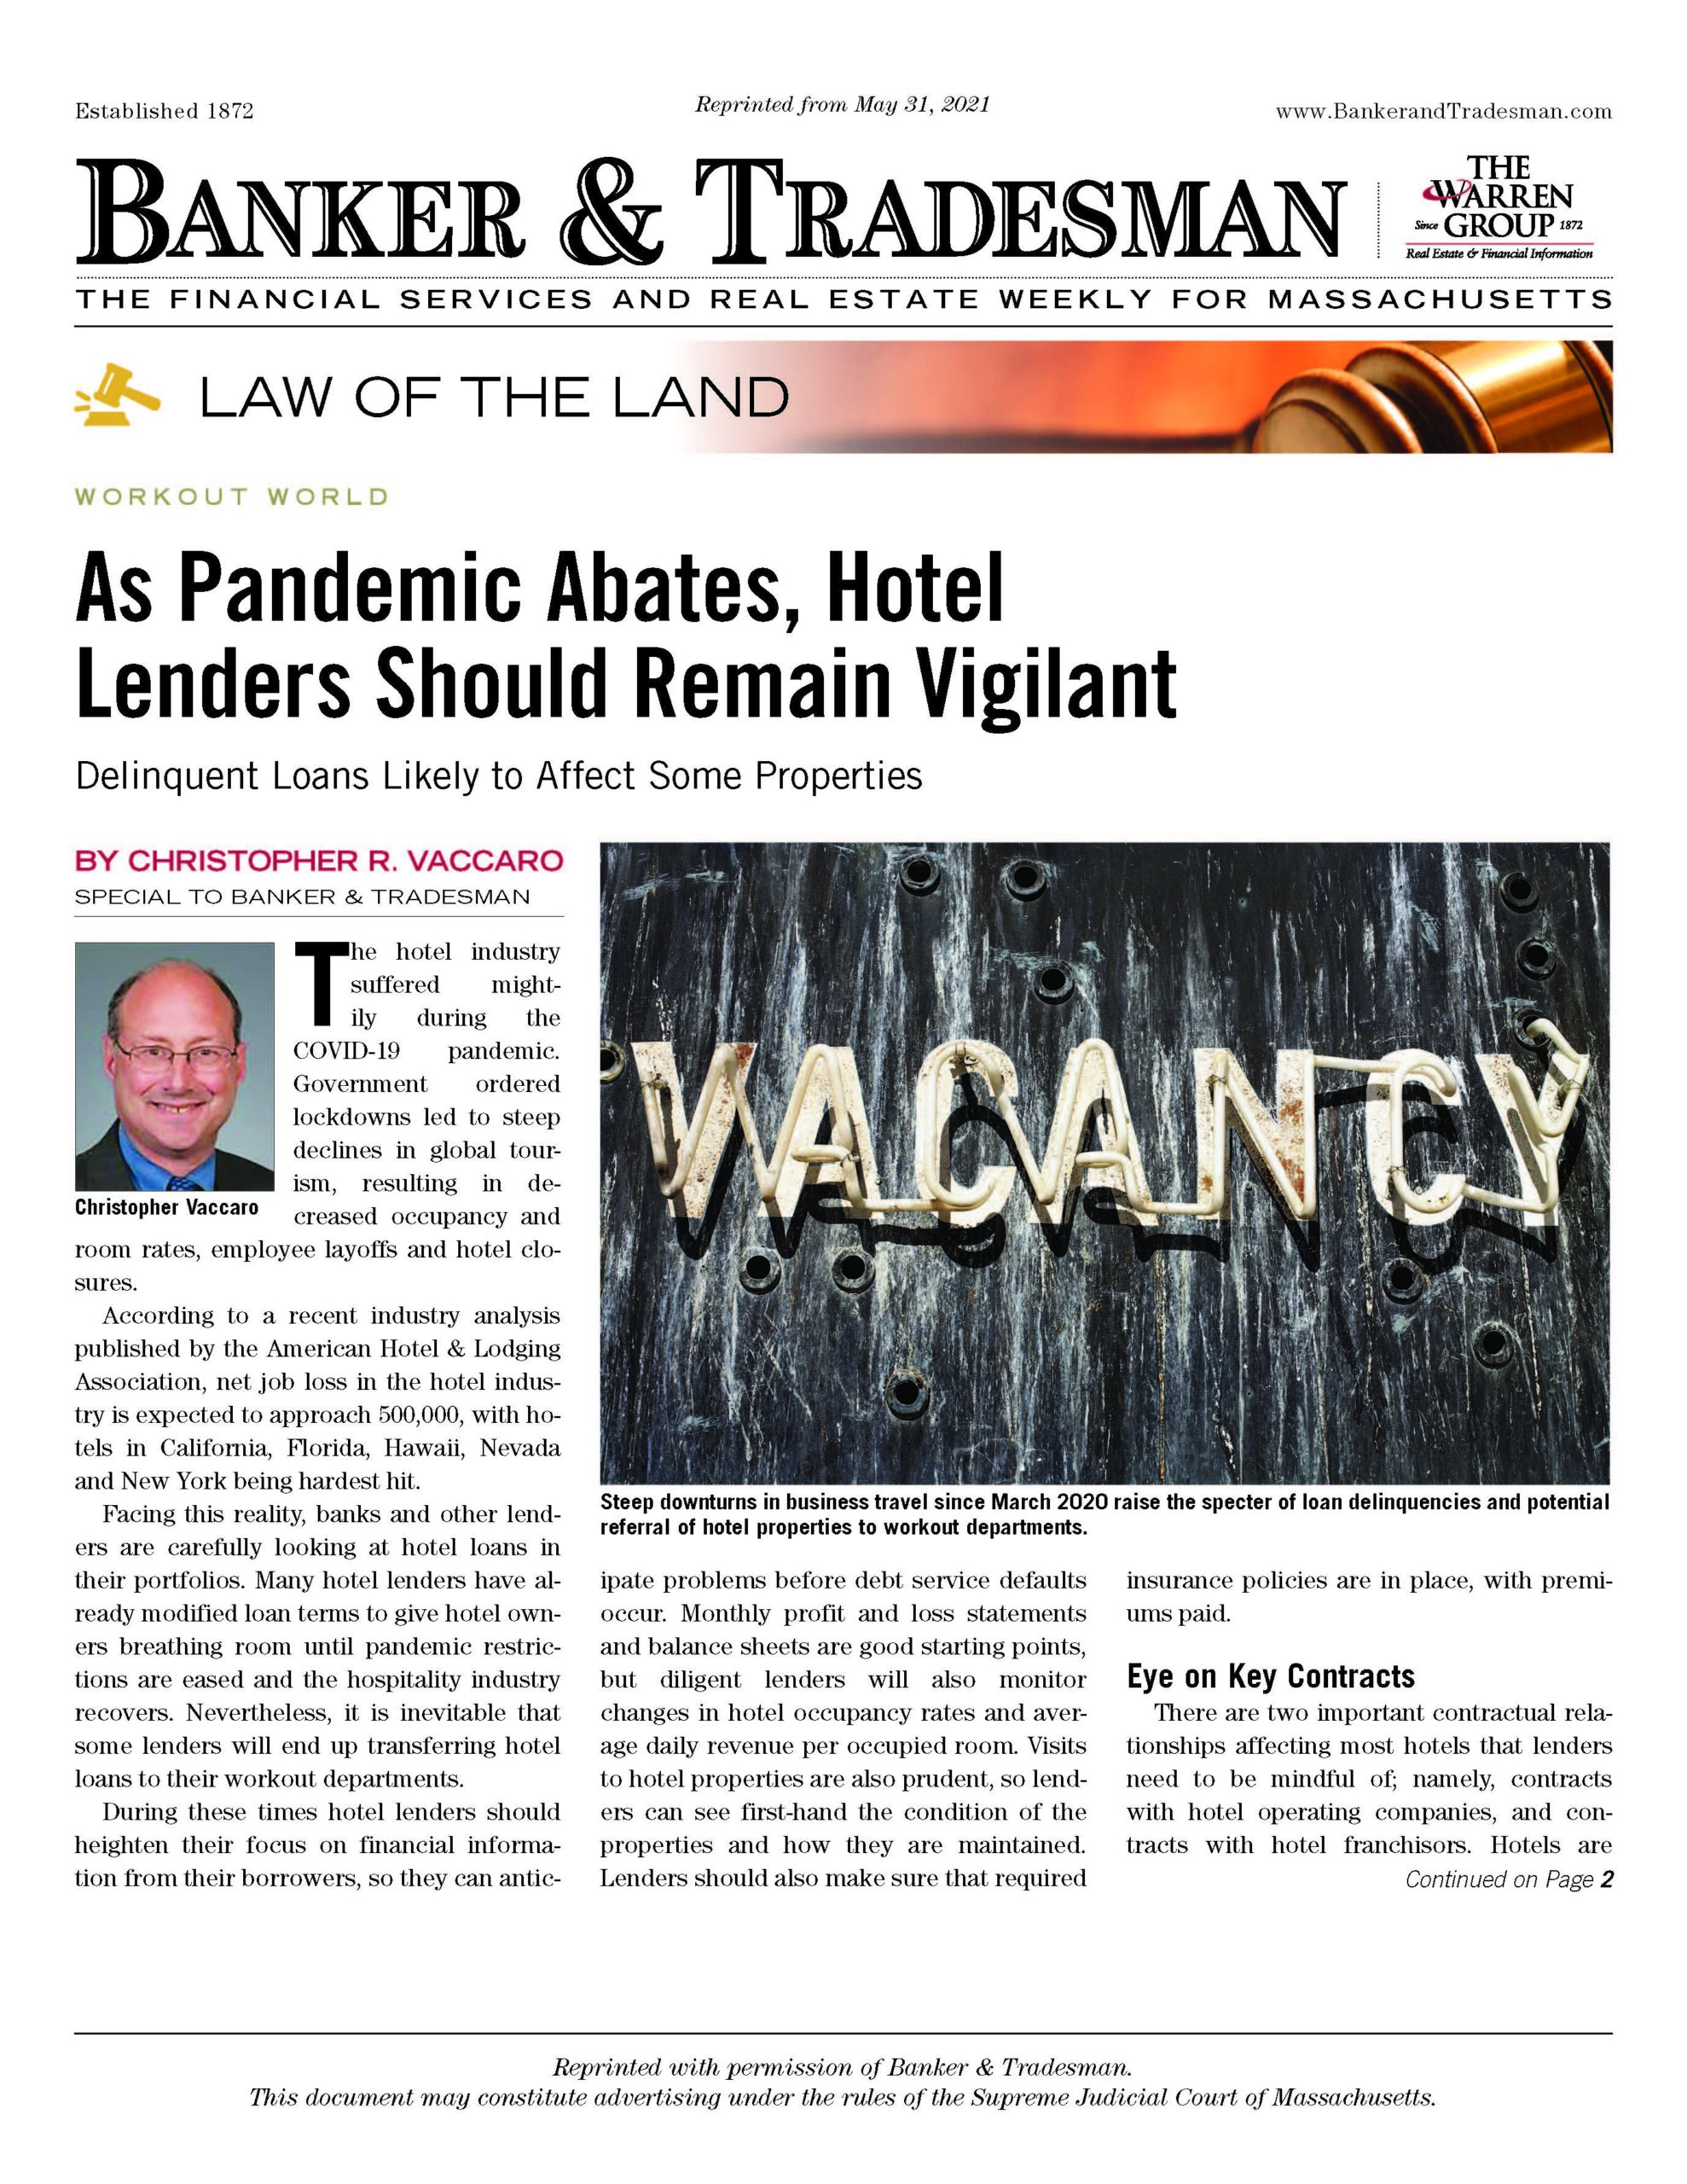 As Pandemic Abates, Hotel Lenders Should Remain Vigilant